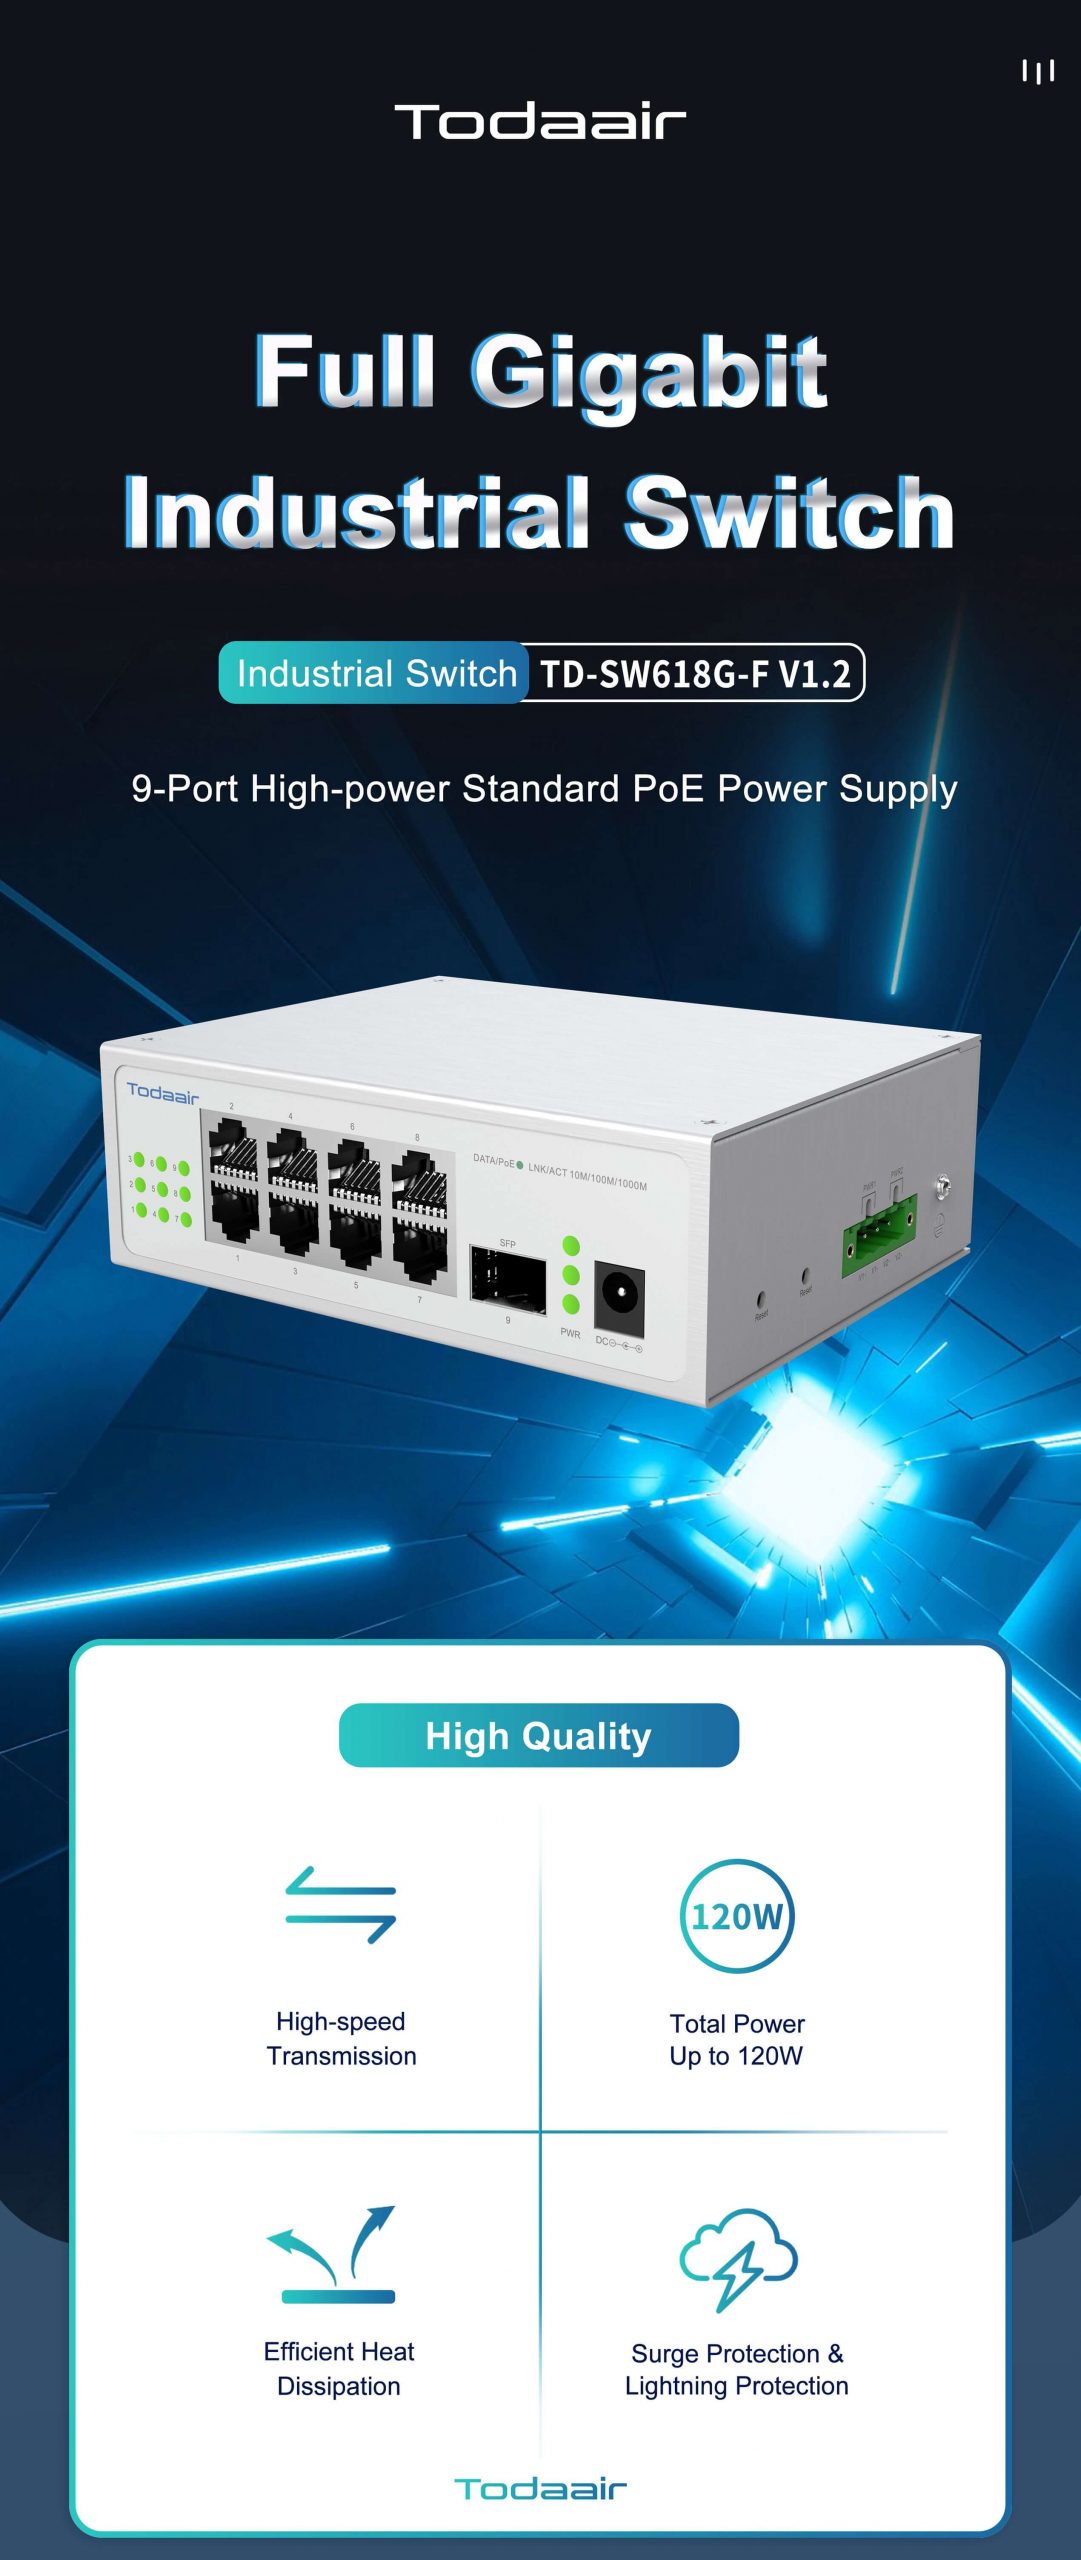 Todaair full gigabit industrial network switch